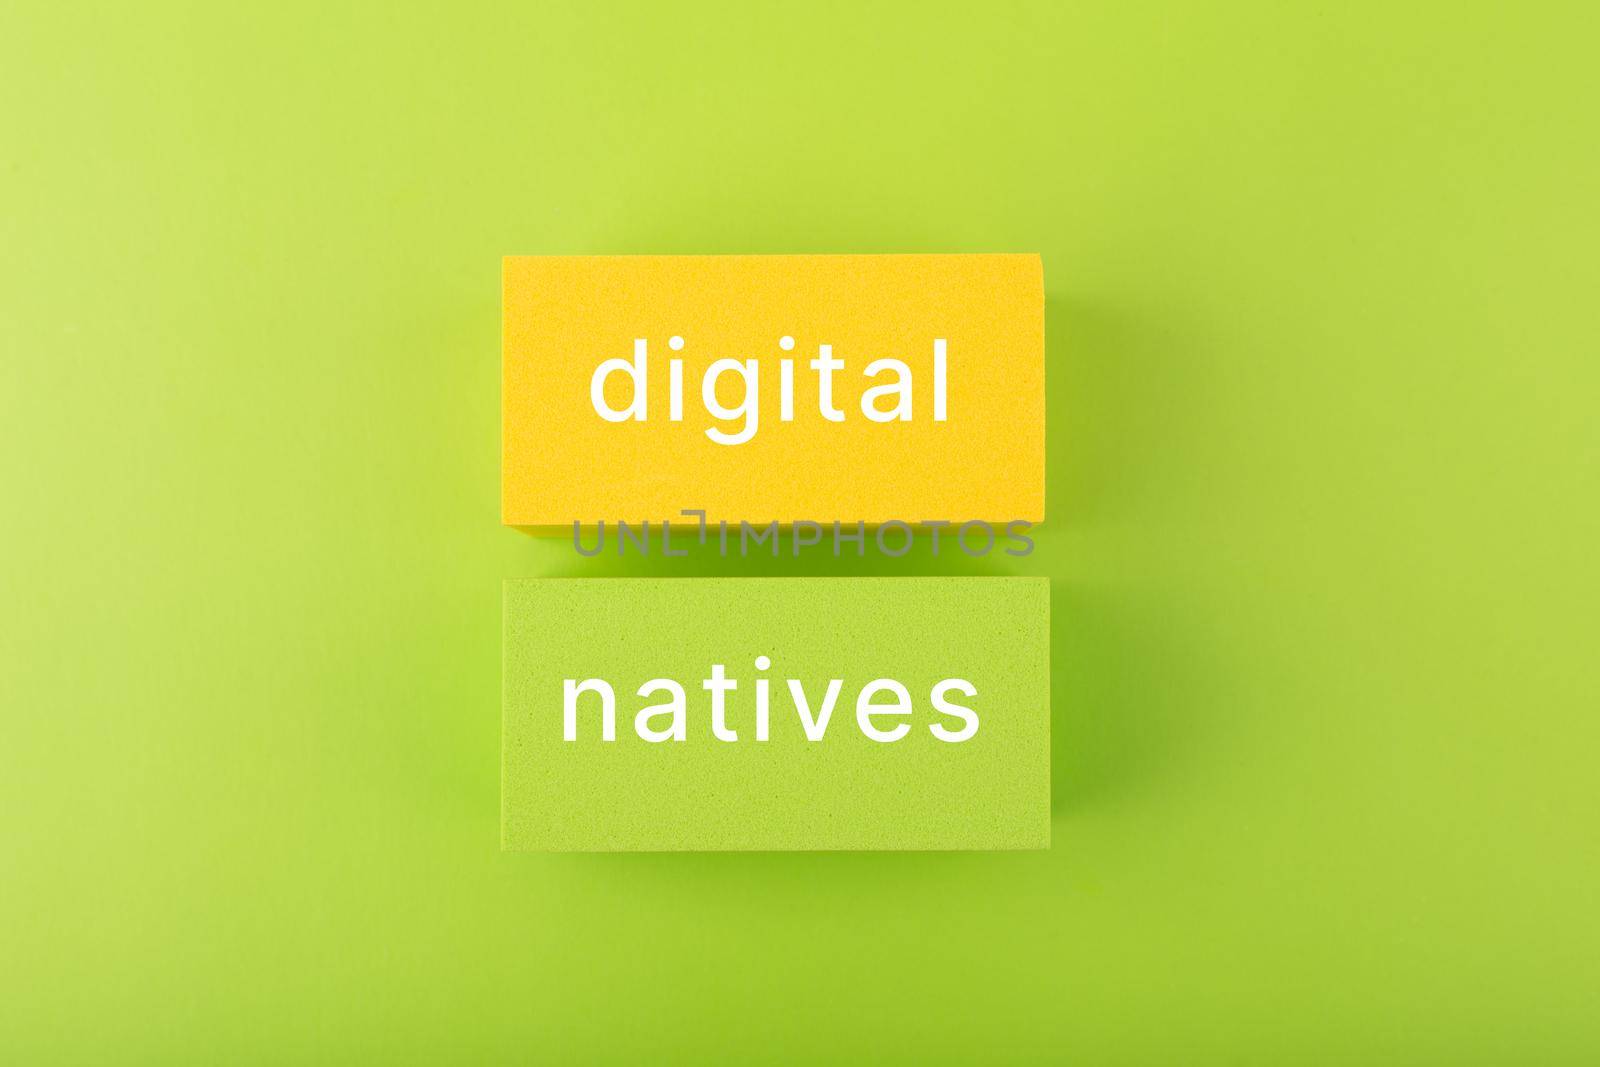 Digital natives inscription on rectangles against bright green background. Concept of digital technology age generation by Senorina_Irina